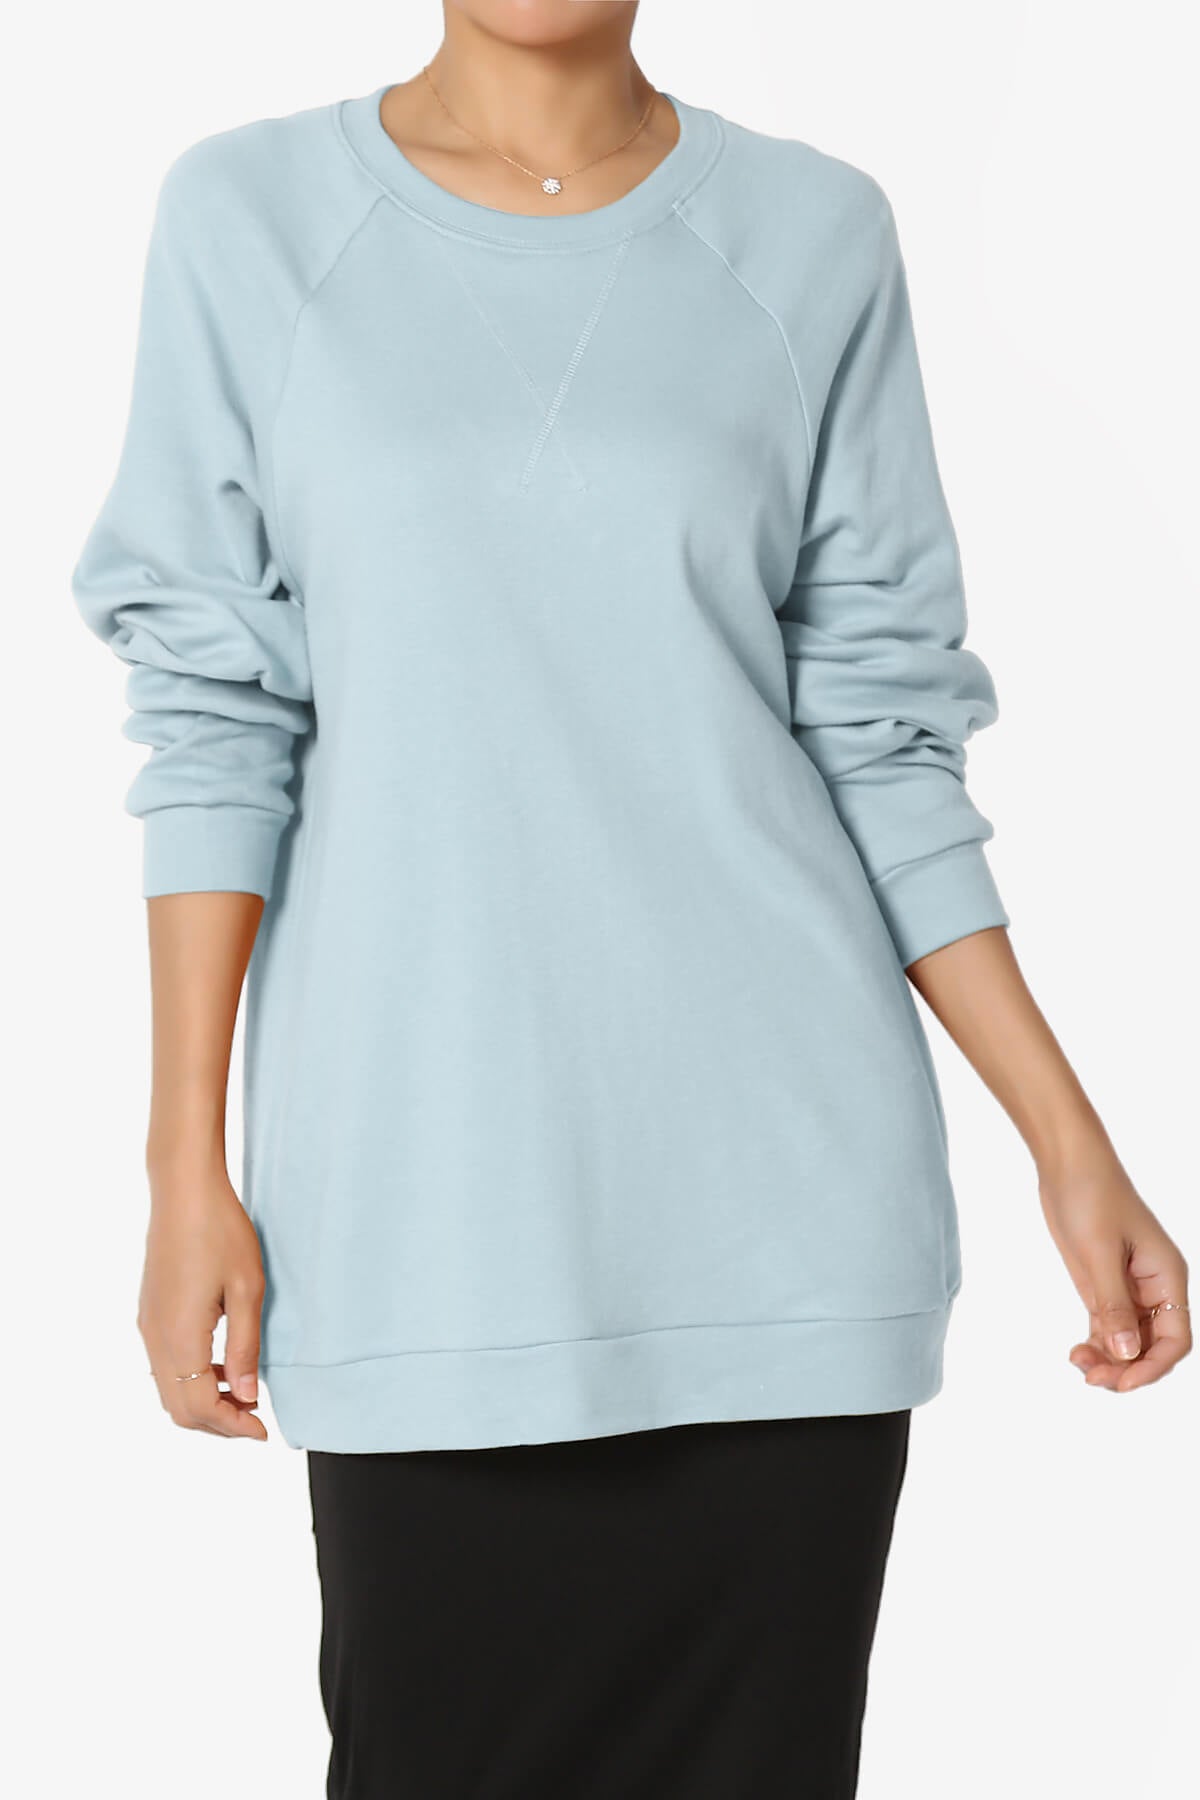 Carlene Cotton Raglan Sleeve Pullover Top ASH BLUE_1